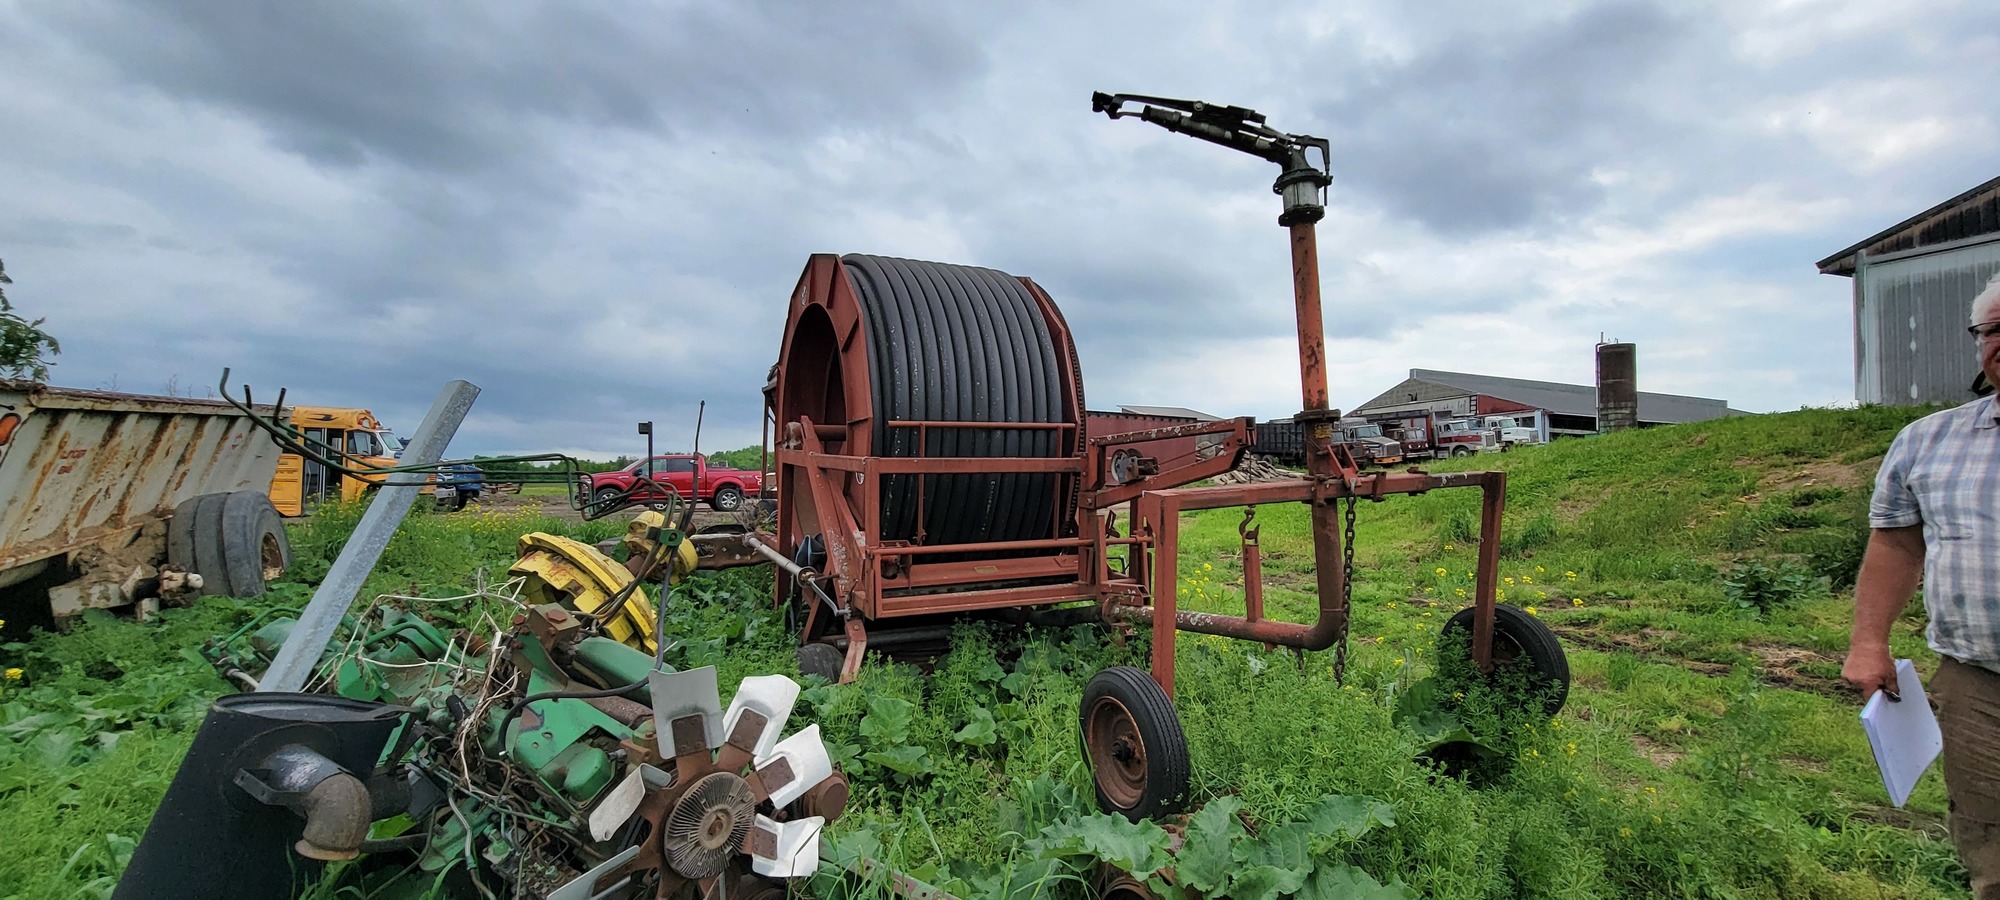 AG RAIN T30A Agriculture Equipment | Iron Listing